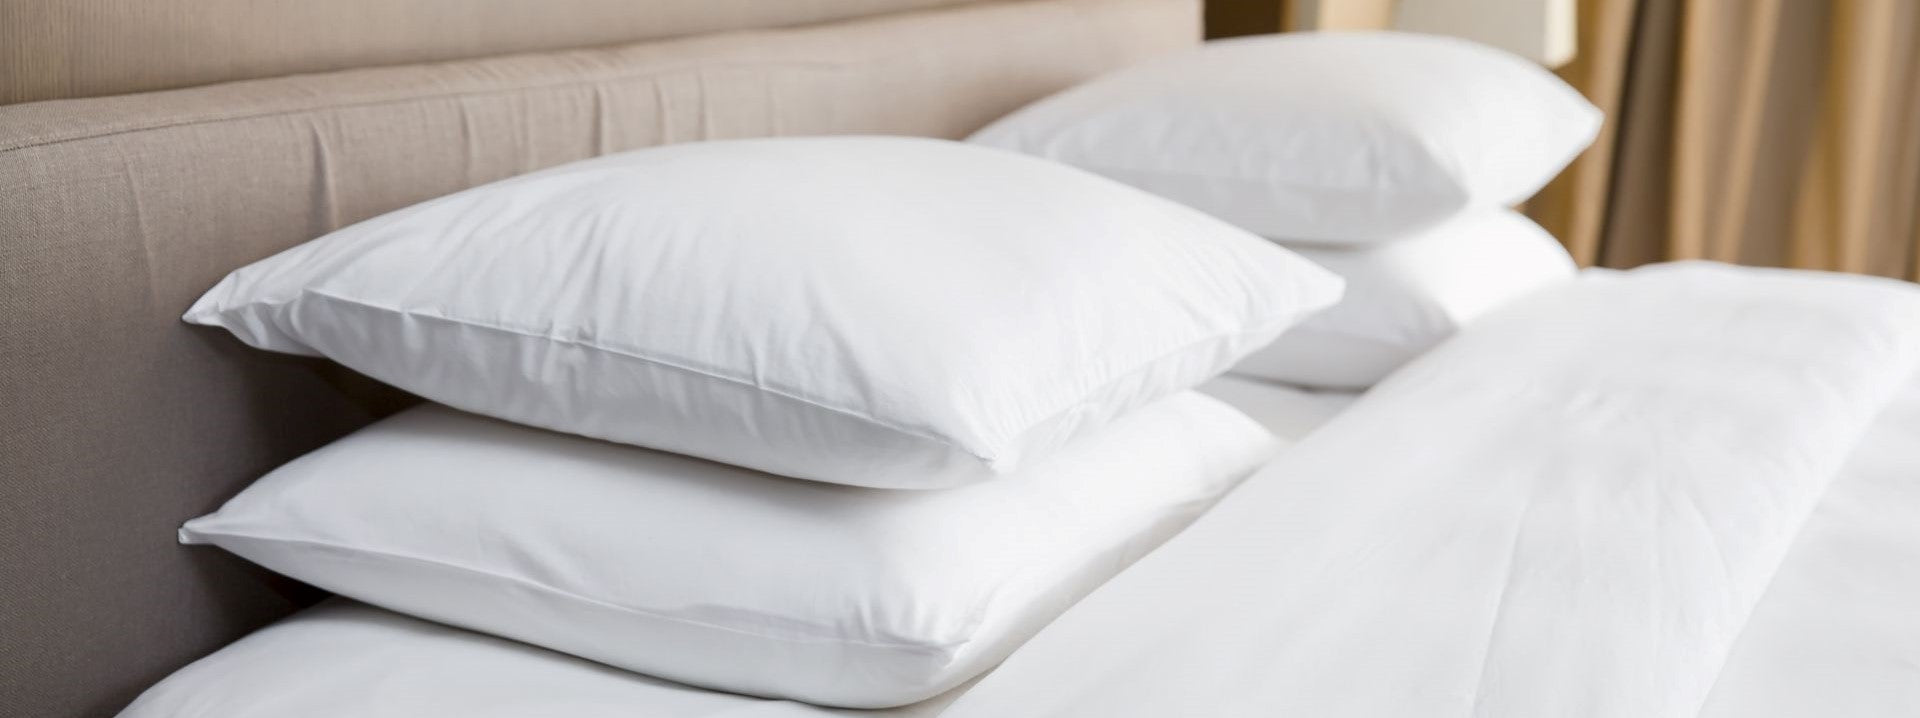 Hotel Oversized Pillows | Extra Filled Large Pillows | Big Pillows